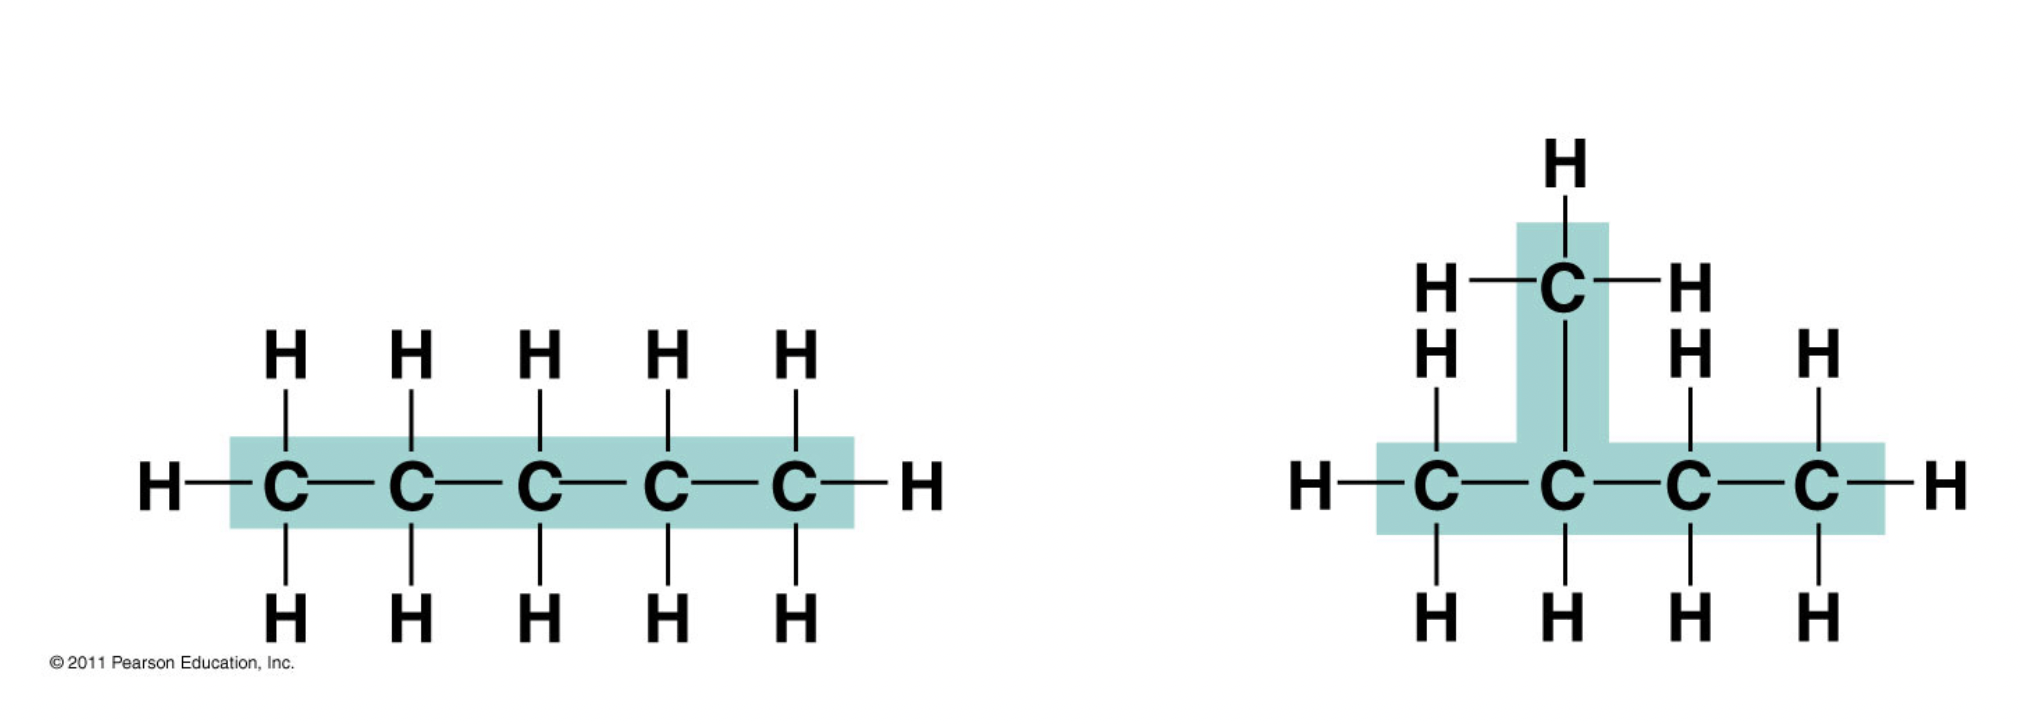 <p>same formula , different arrangement</p><ul><li><p>covalent bonds b/w atoms</p></li><li><p>more possible structural isomers as molecule gets bigger</p></li></ul>